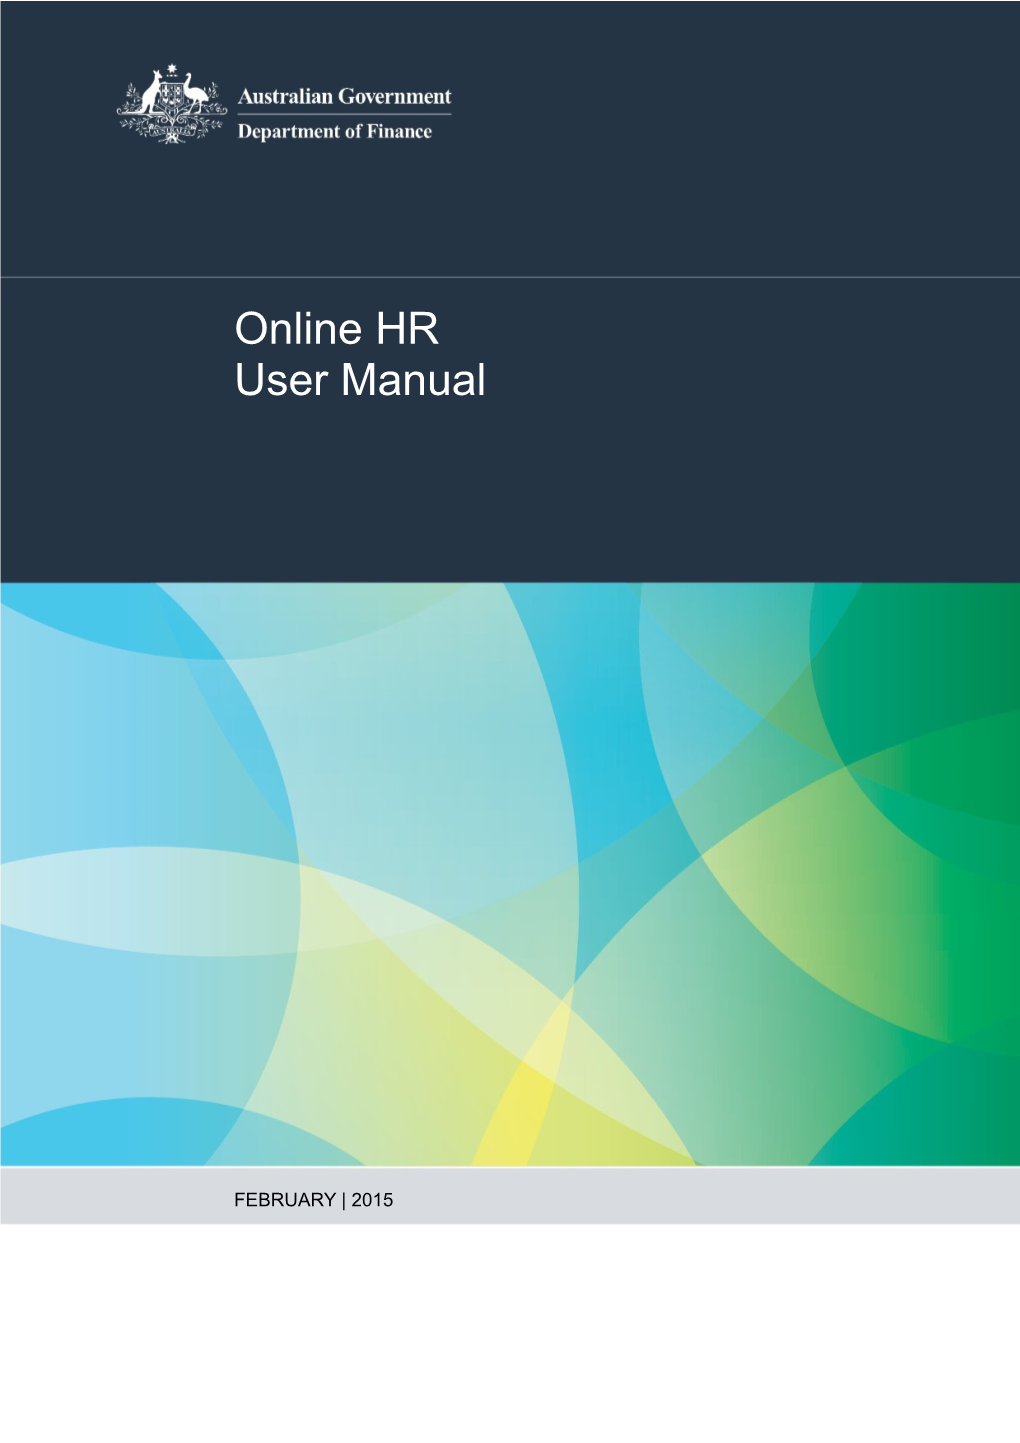 Online HR User Manual